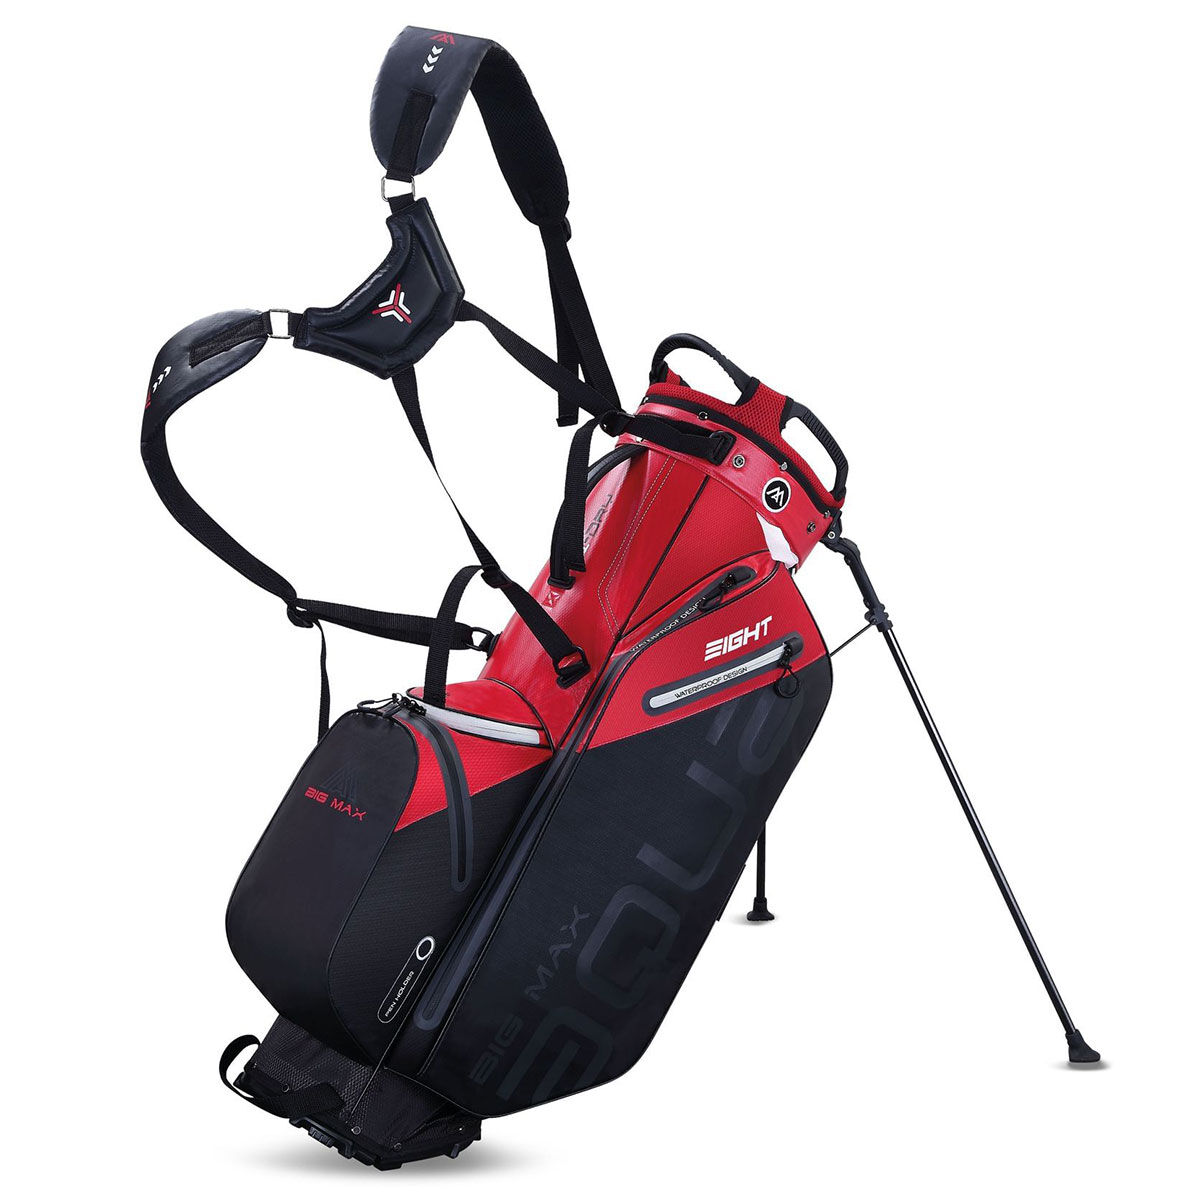 BIG MAX AQUA Eight G Waterproof Golf Stand Bag, Black red | American Golf von BIG MAX